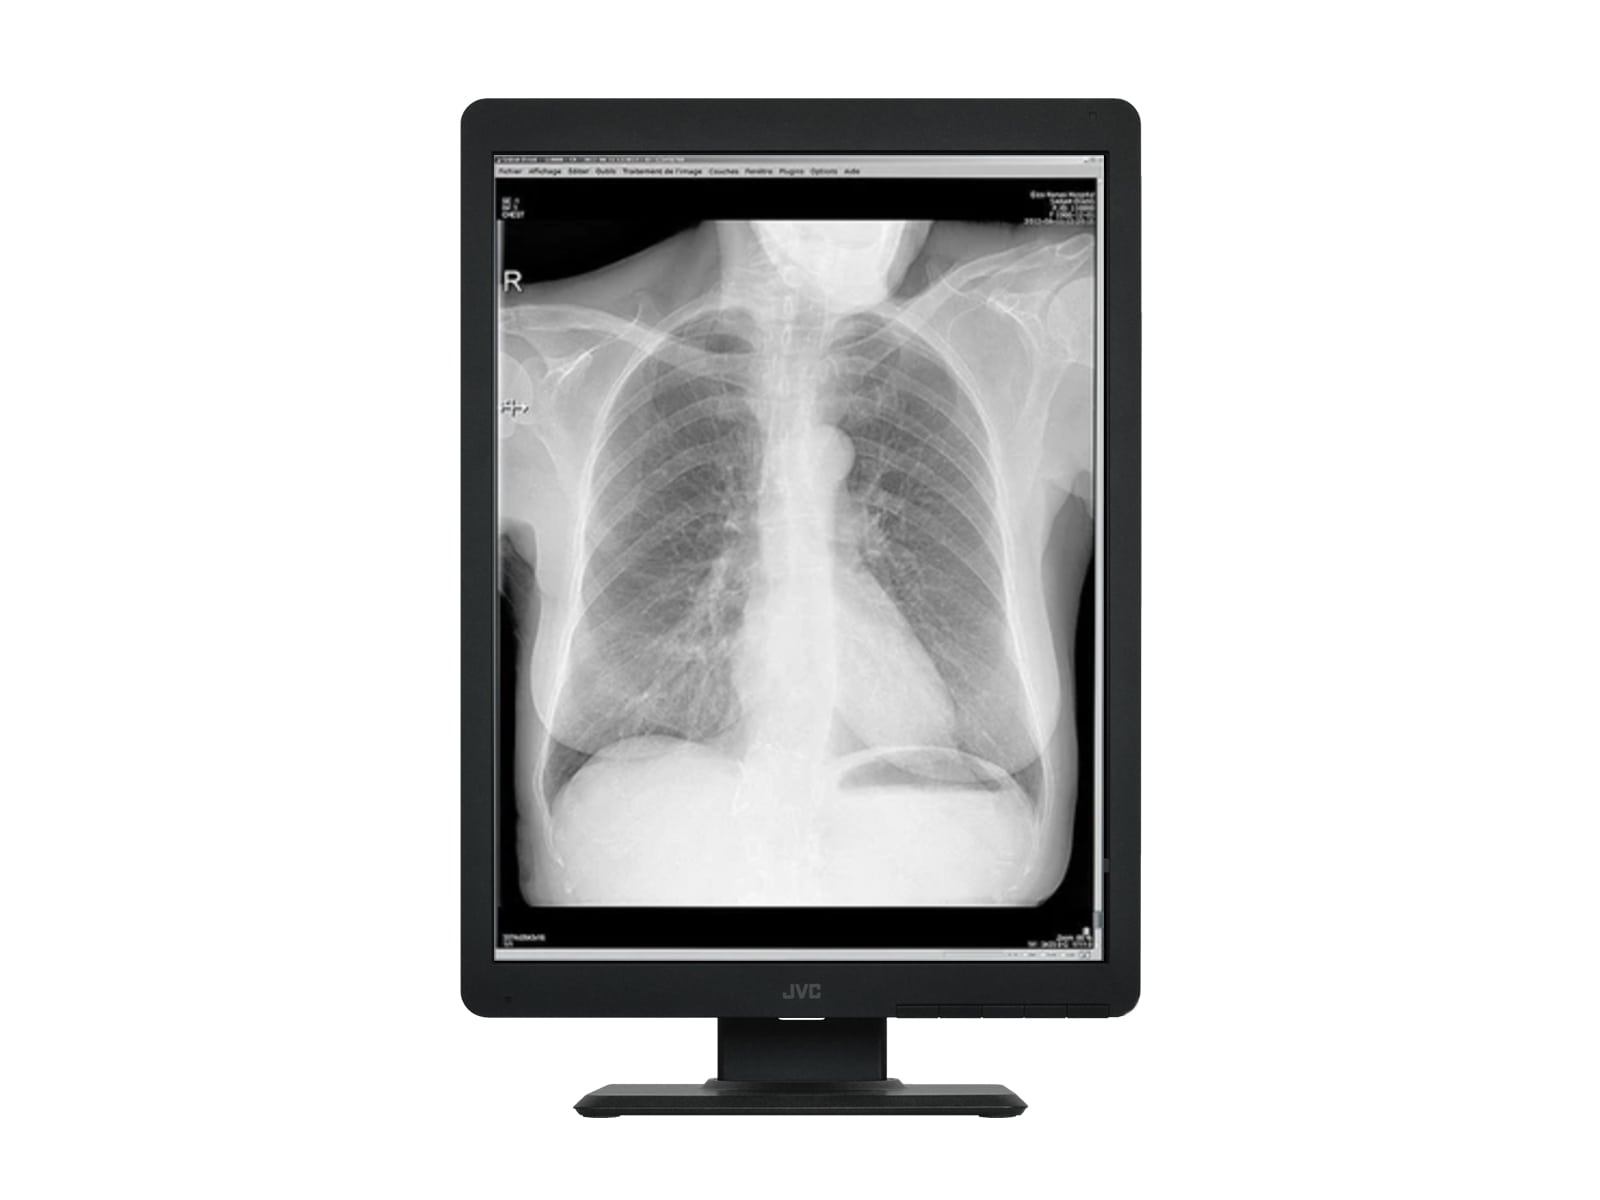 Vidar DiagnosticPro Advantage General Radiology & Mammography Film Digitizer (16333-004)